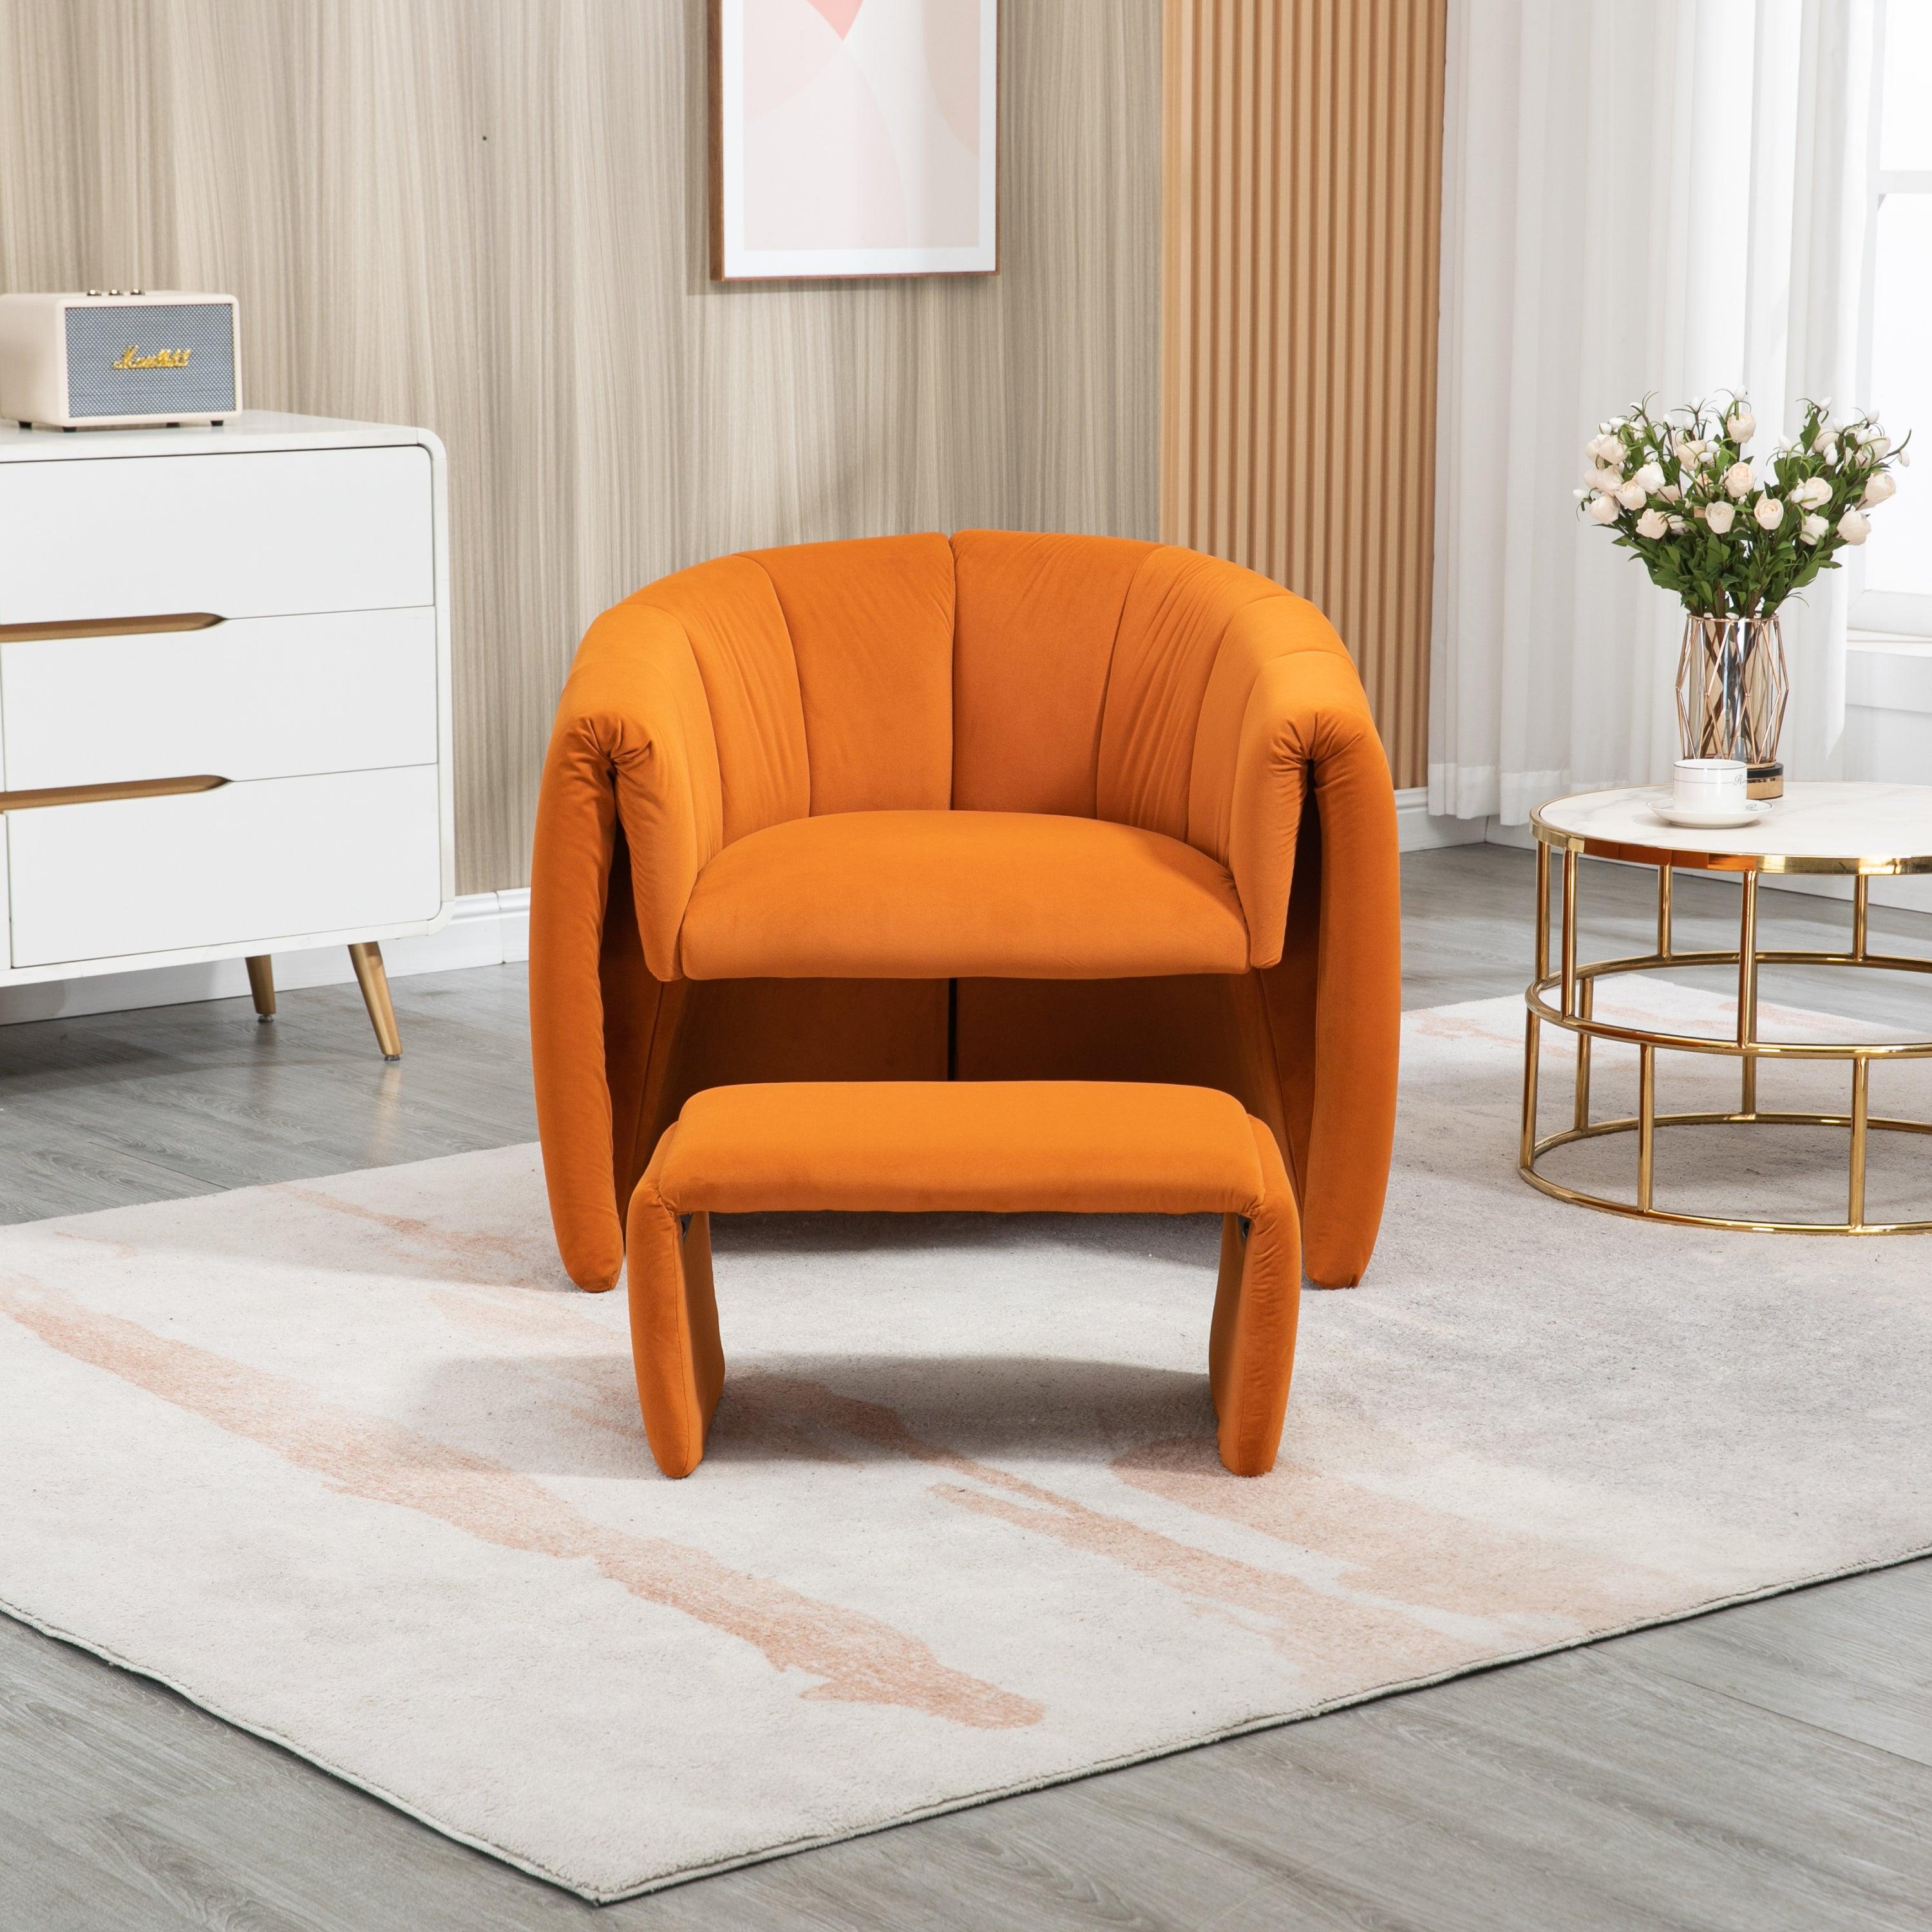 🆓🚛 Yungee Mid Century Modern Barrel Accent Chair With Ottoman Set, Orange